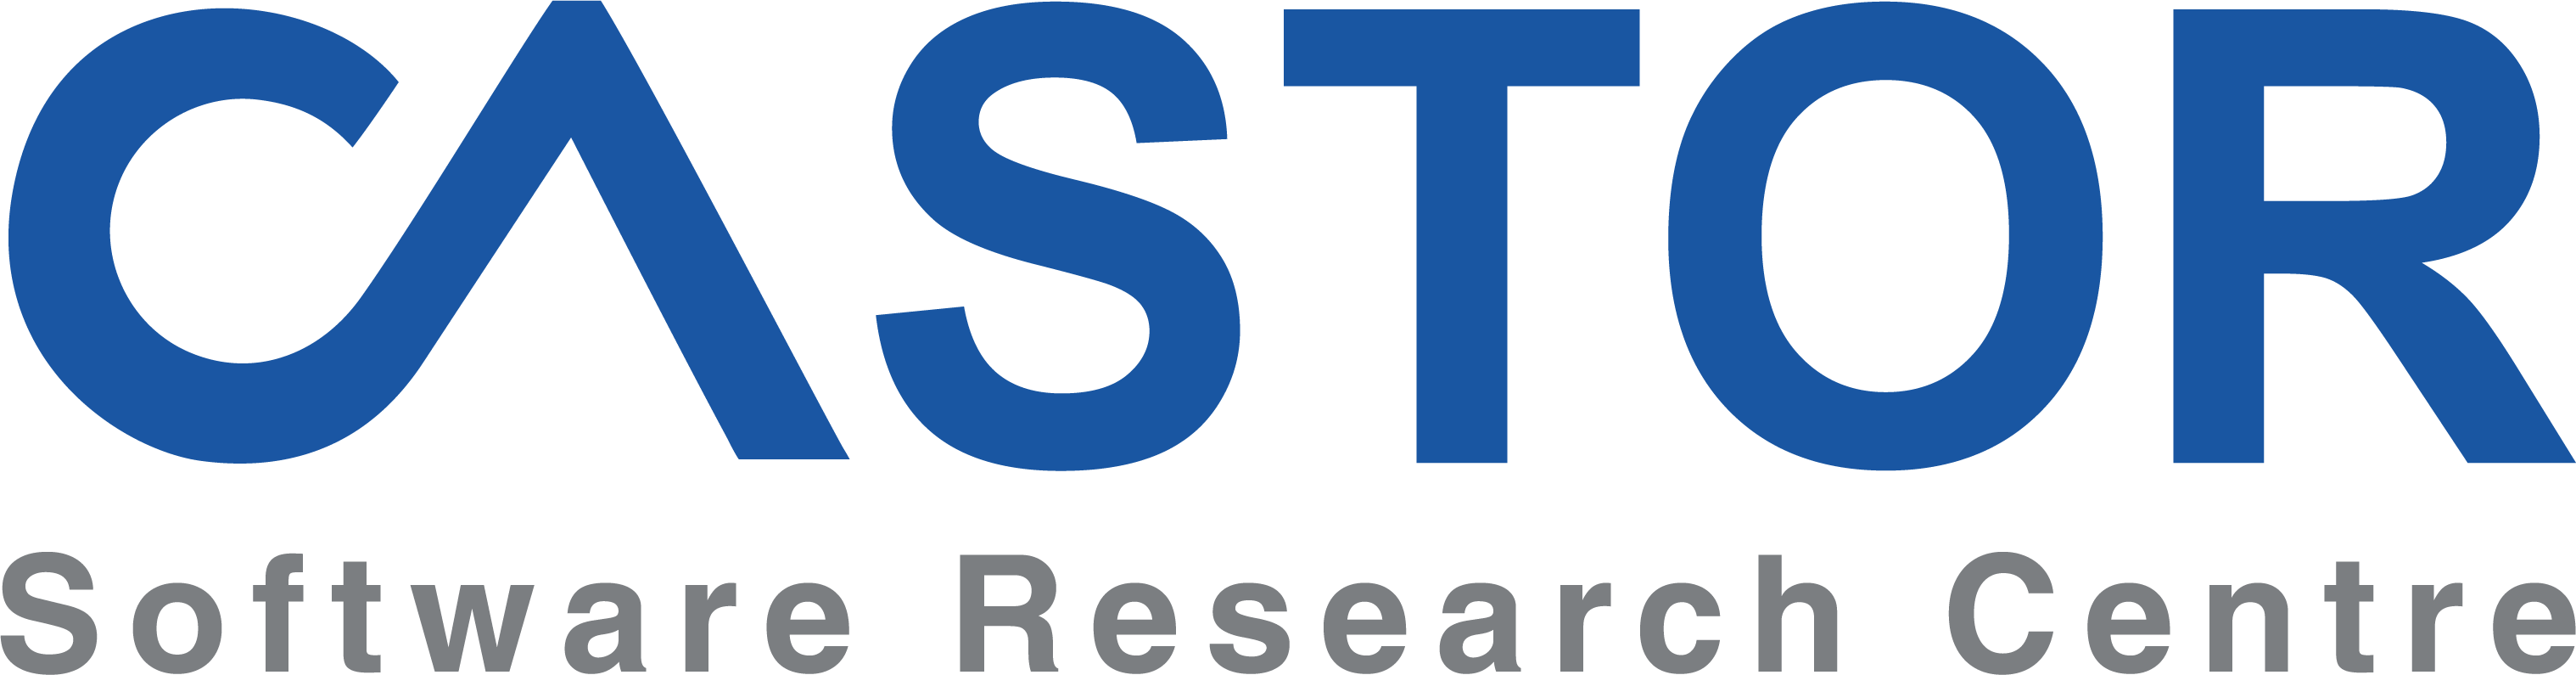 Logo CASTOR Software Research Centre